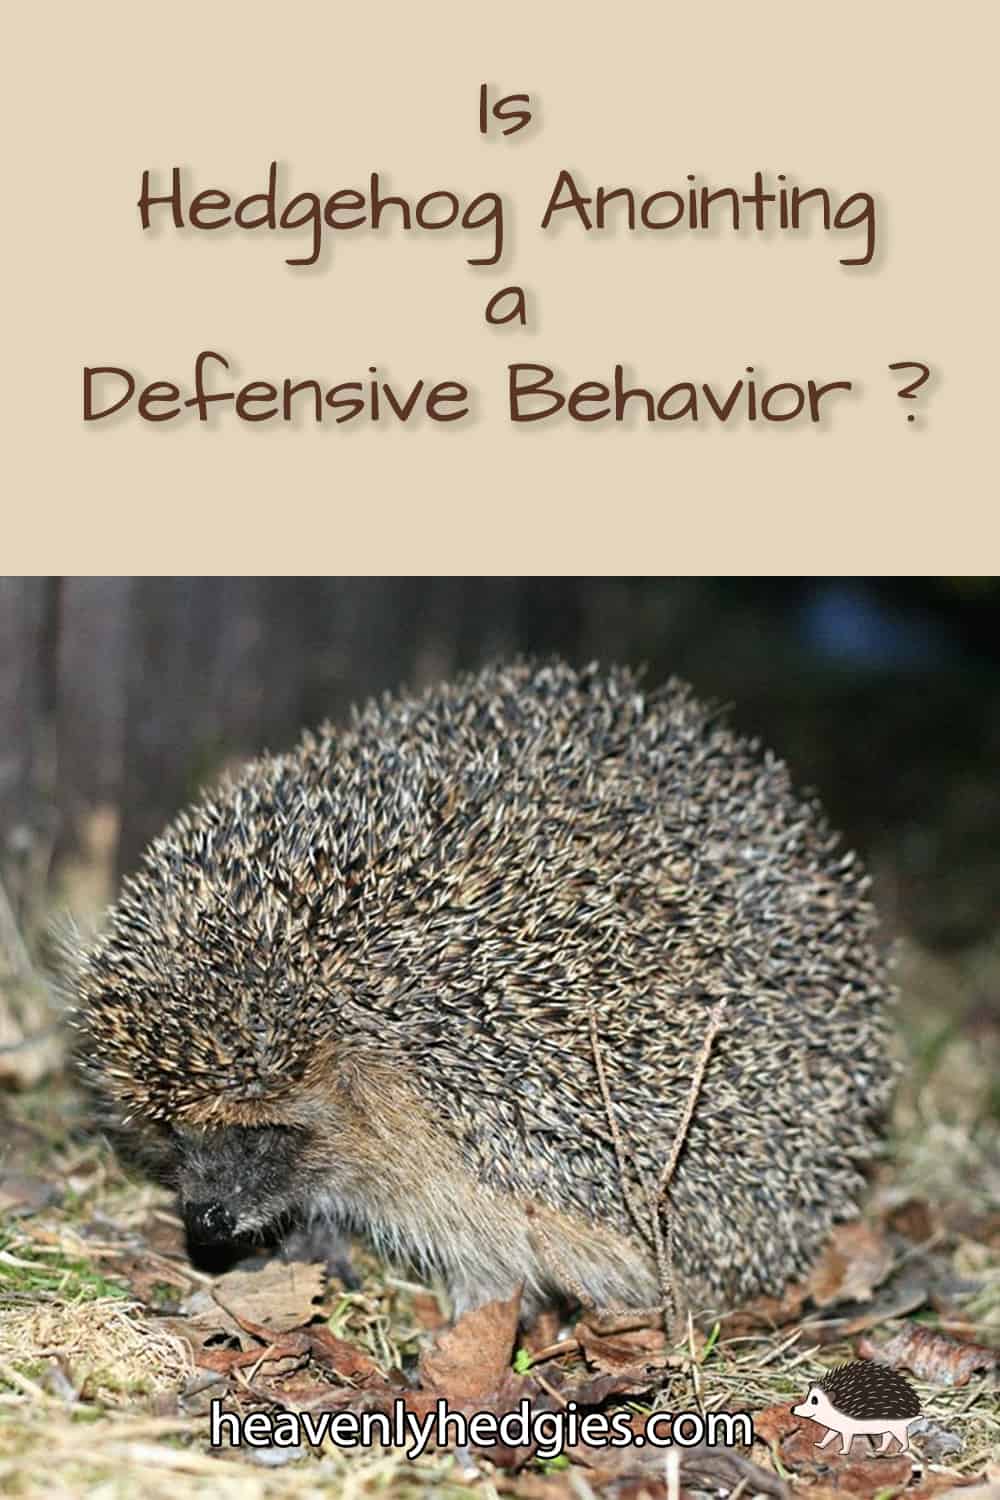 A hedgehog in the wild displaying defensive behavior